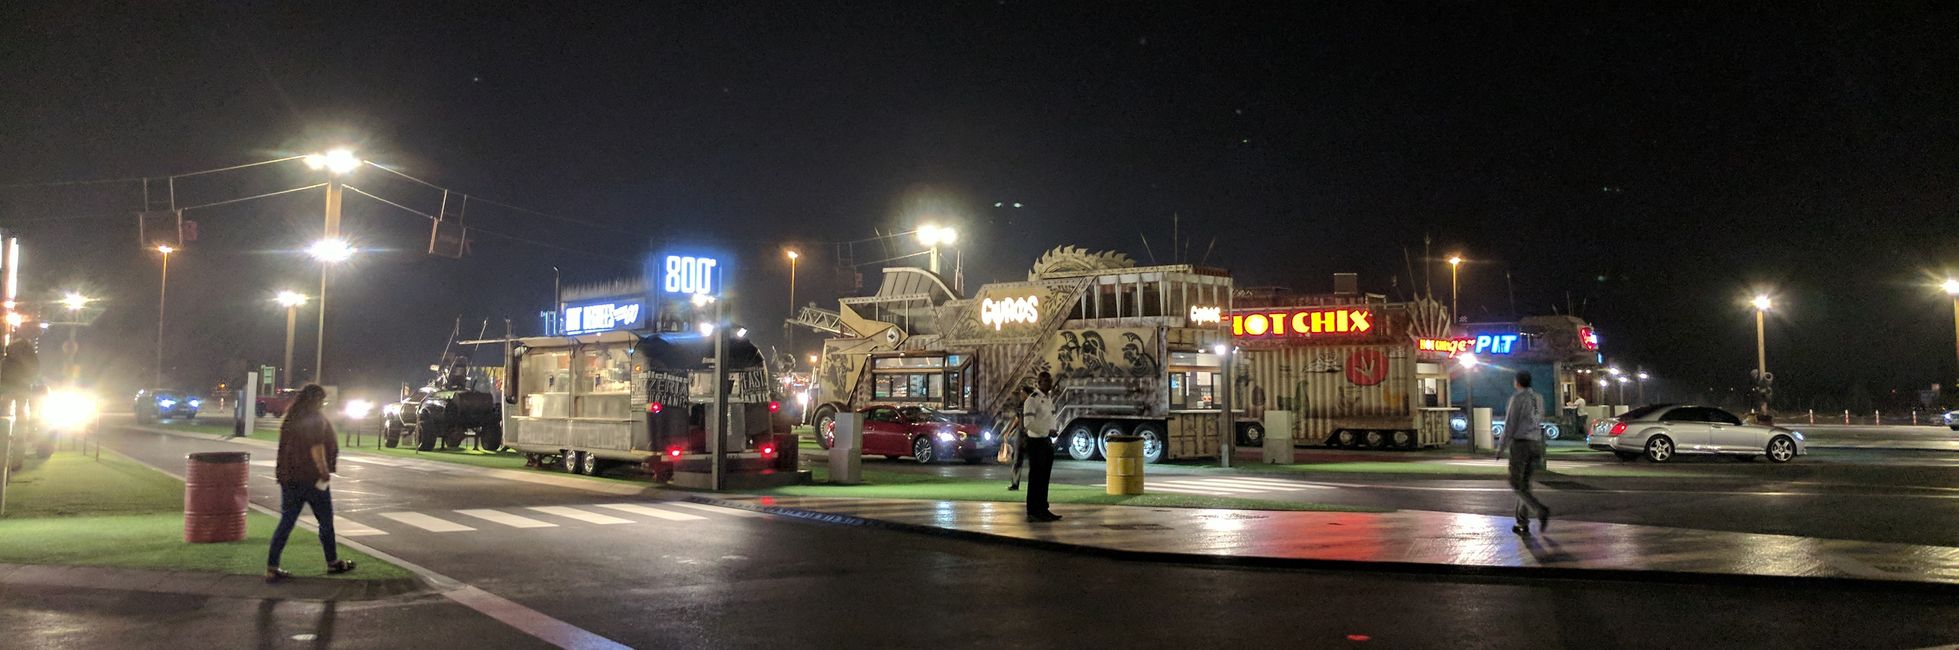 Day 5 (2017) Abu Dhabi: Motiongate Themepark